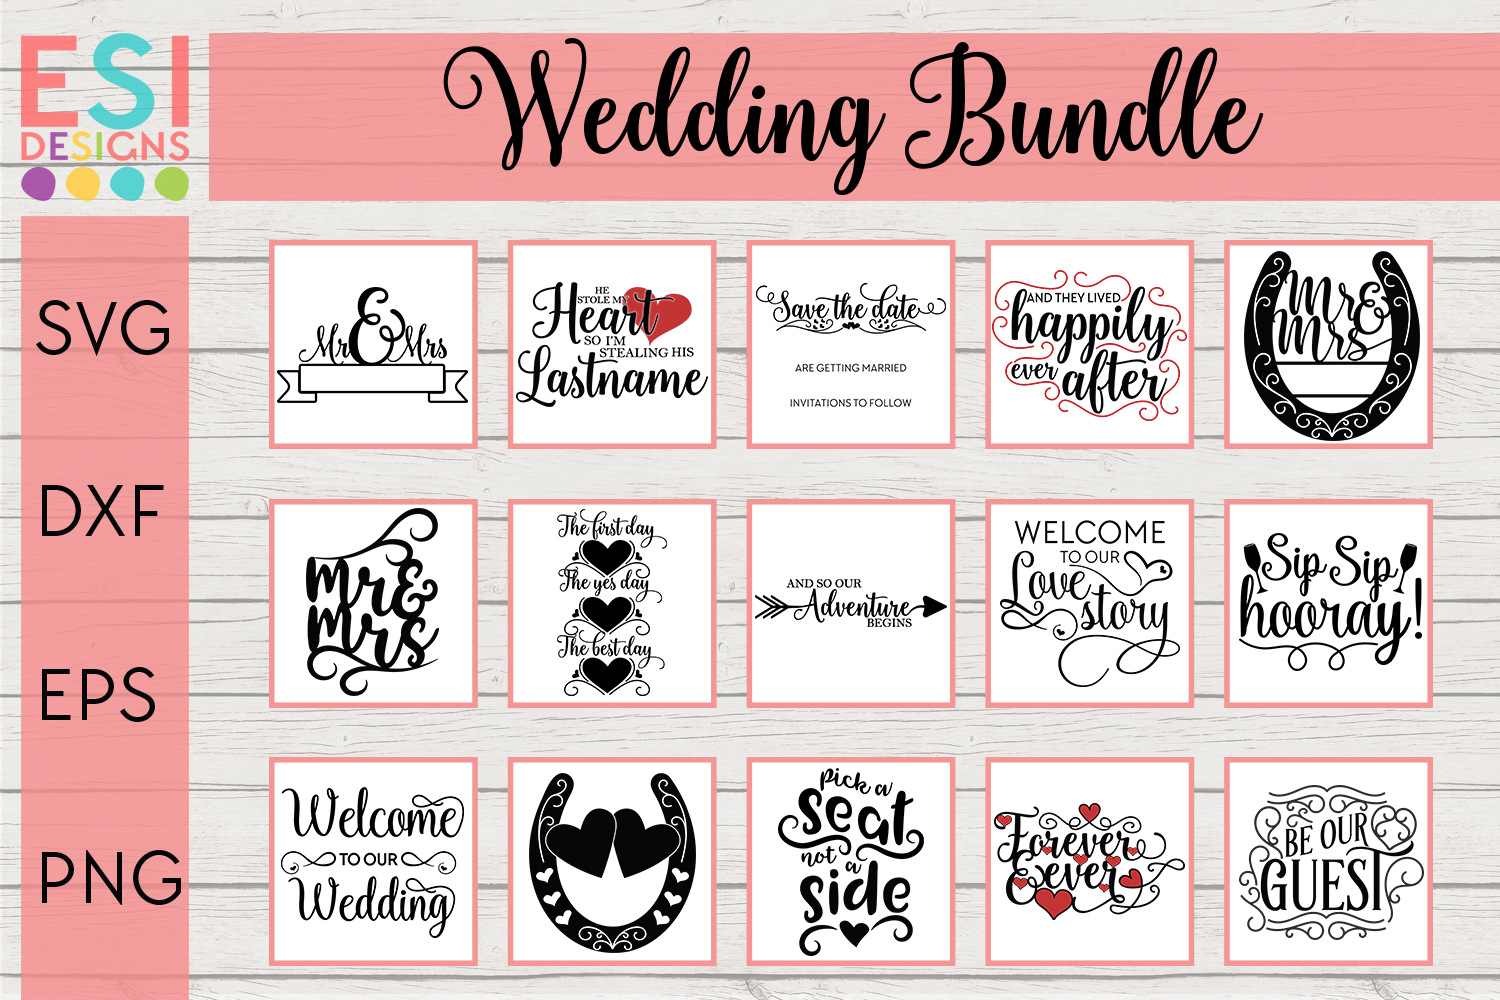 Download Wedding Bundle SVG - 15 Designs